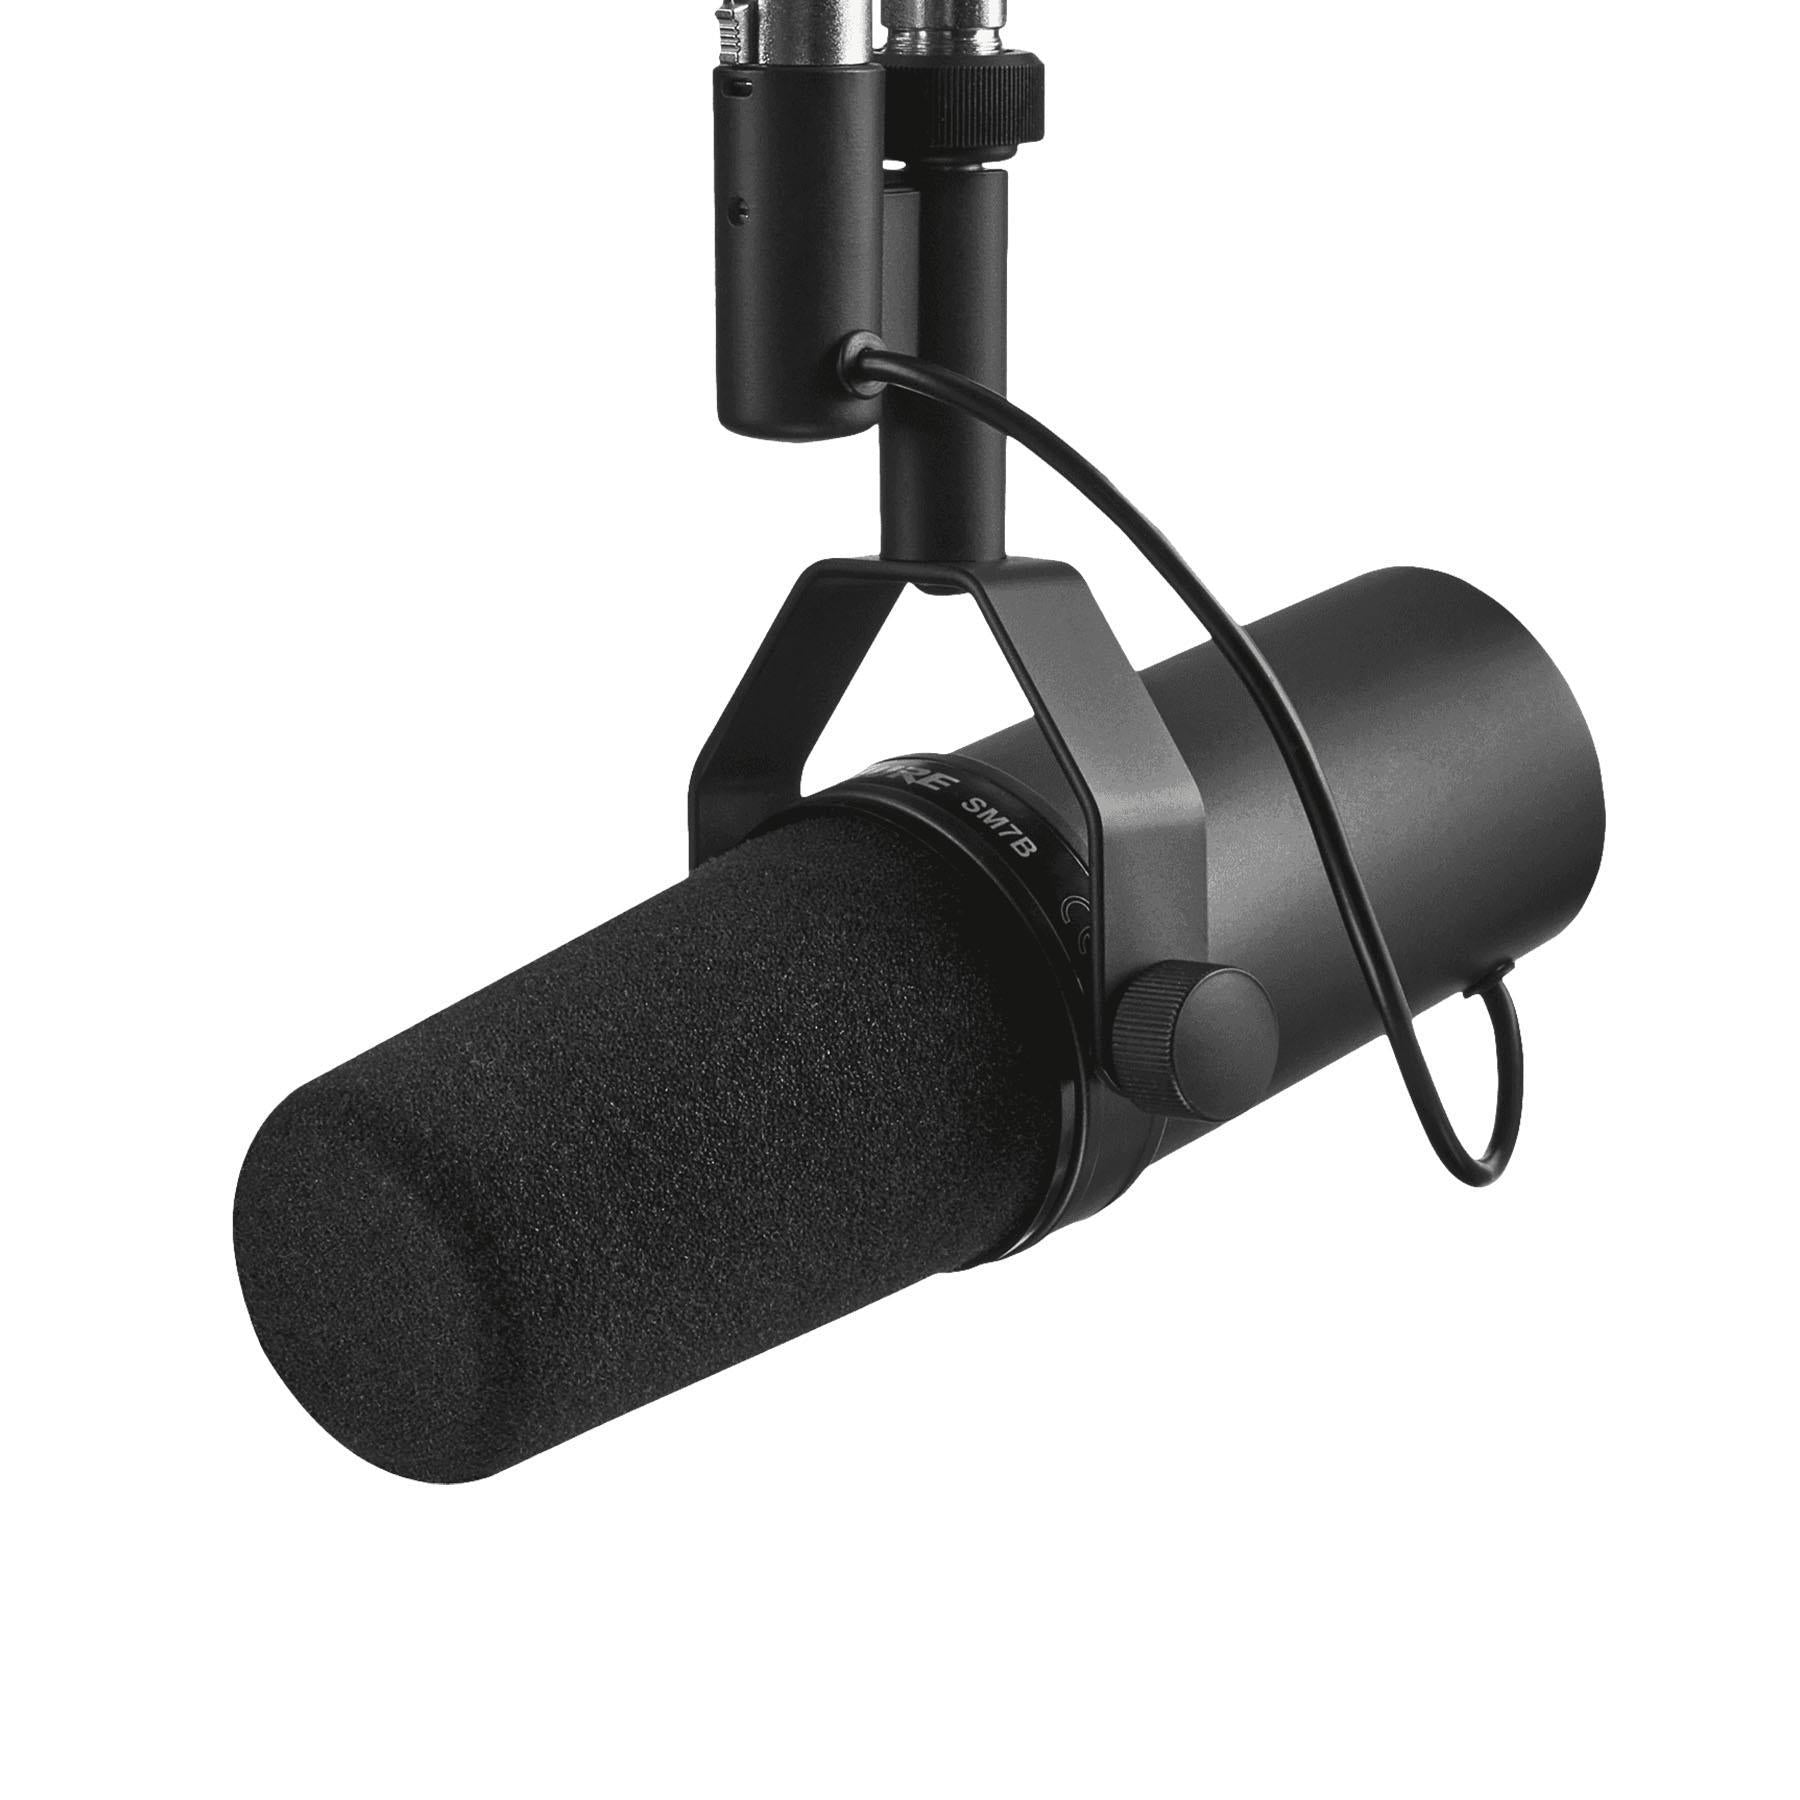 Shure SM7B Dynamic Microphone Bundle with sE Electronics DM1 & Pro Co XLR  Cable